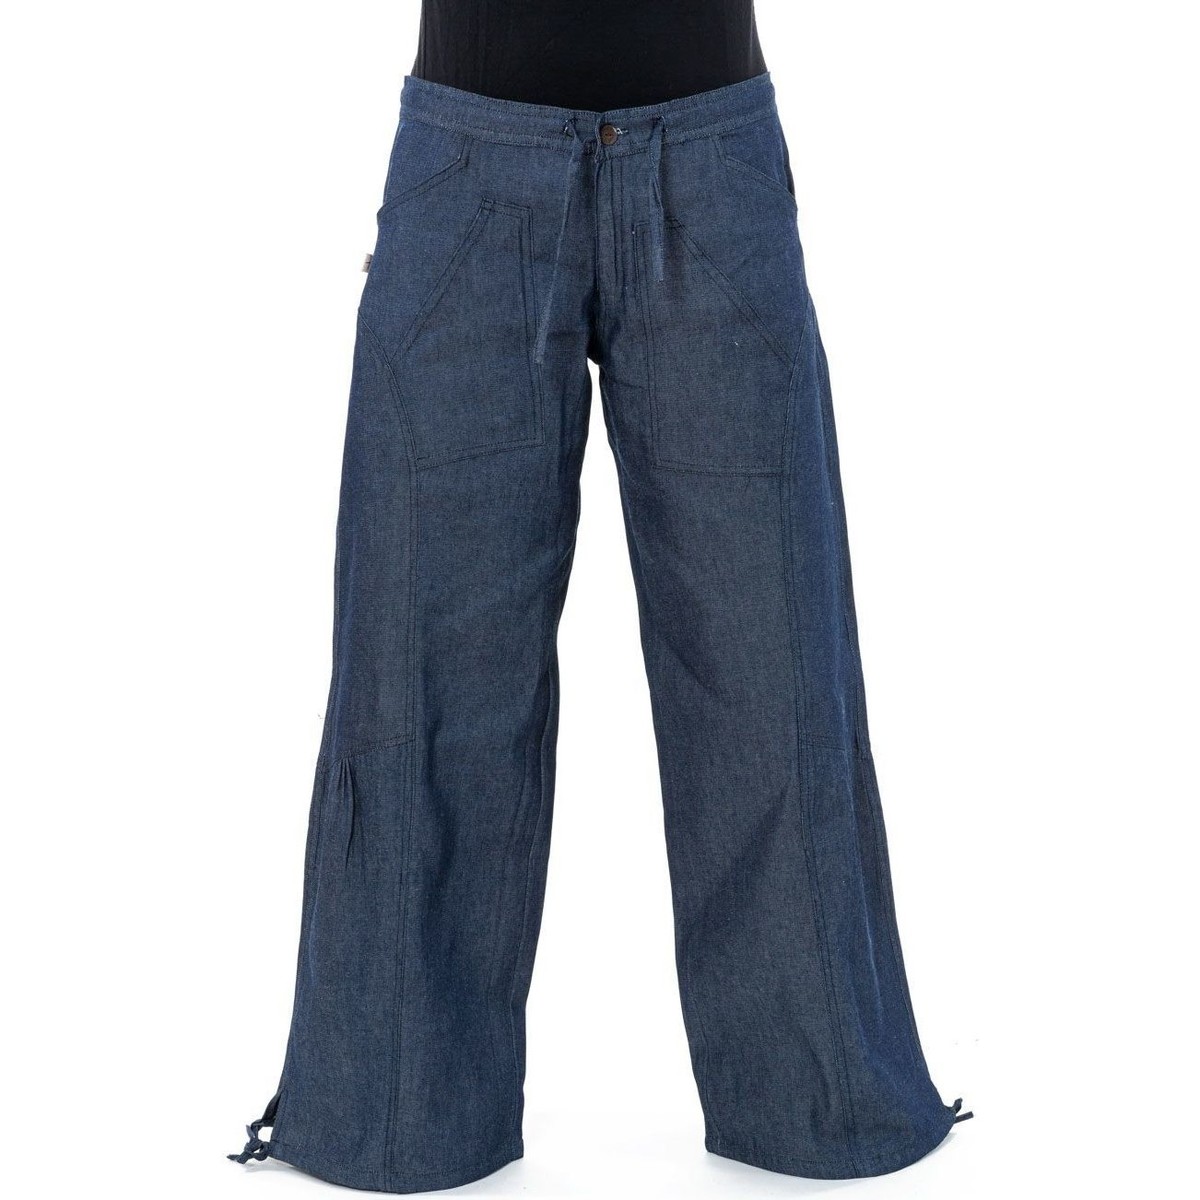 Vêtements Wednesday's Girl Curve Svarta skinny jeans med hög midja Pantalon blue jean hybride femme homme street chic Nila Bleu